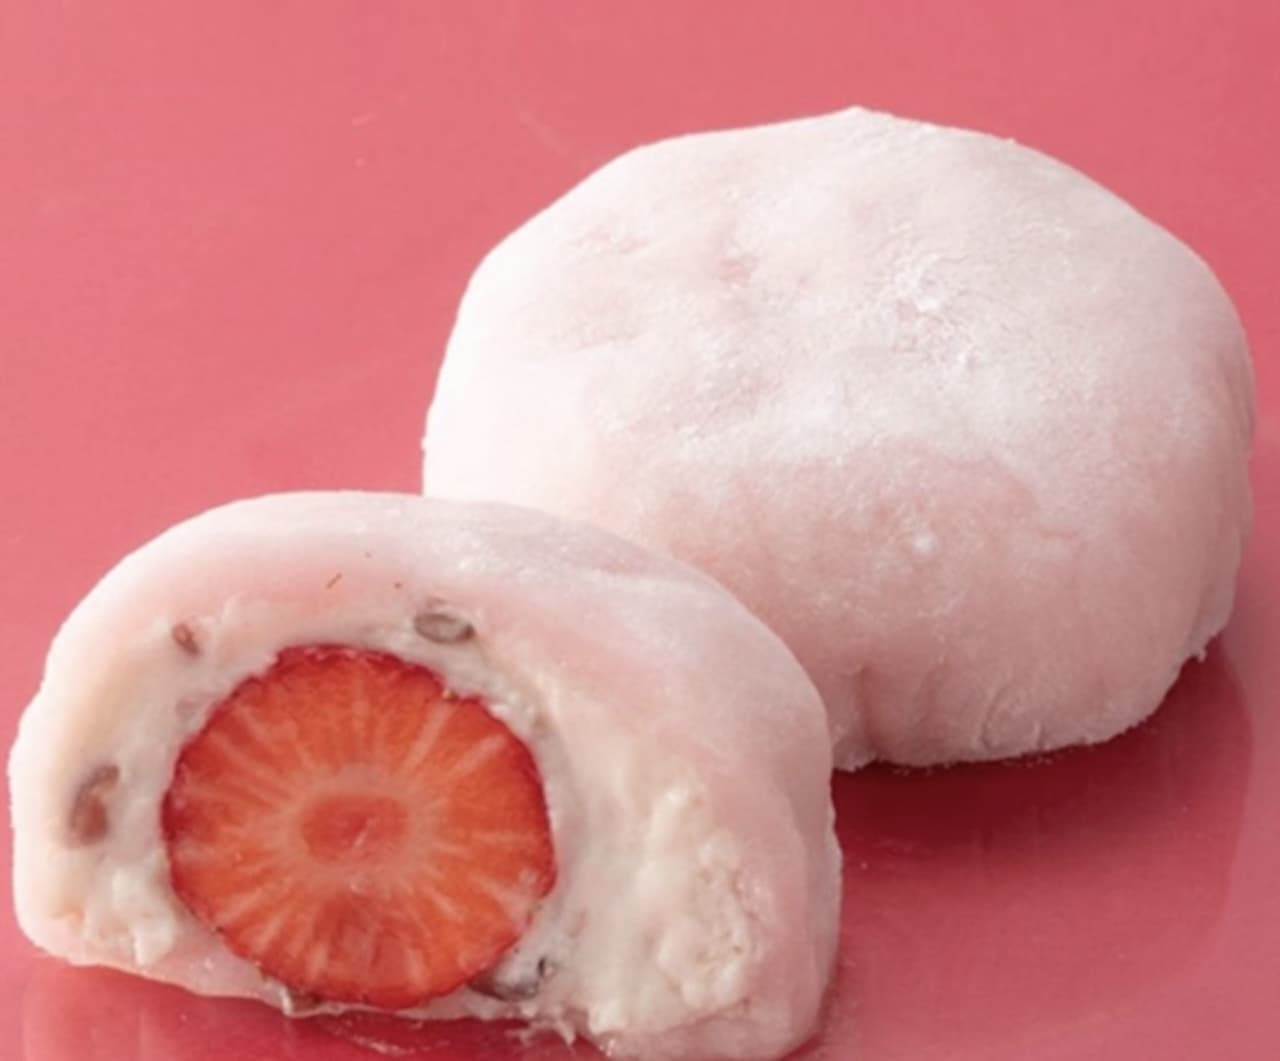 Chateraise "One strawberry whipped cream Daifuku"